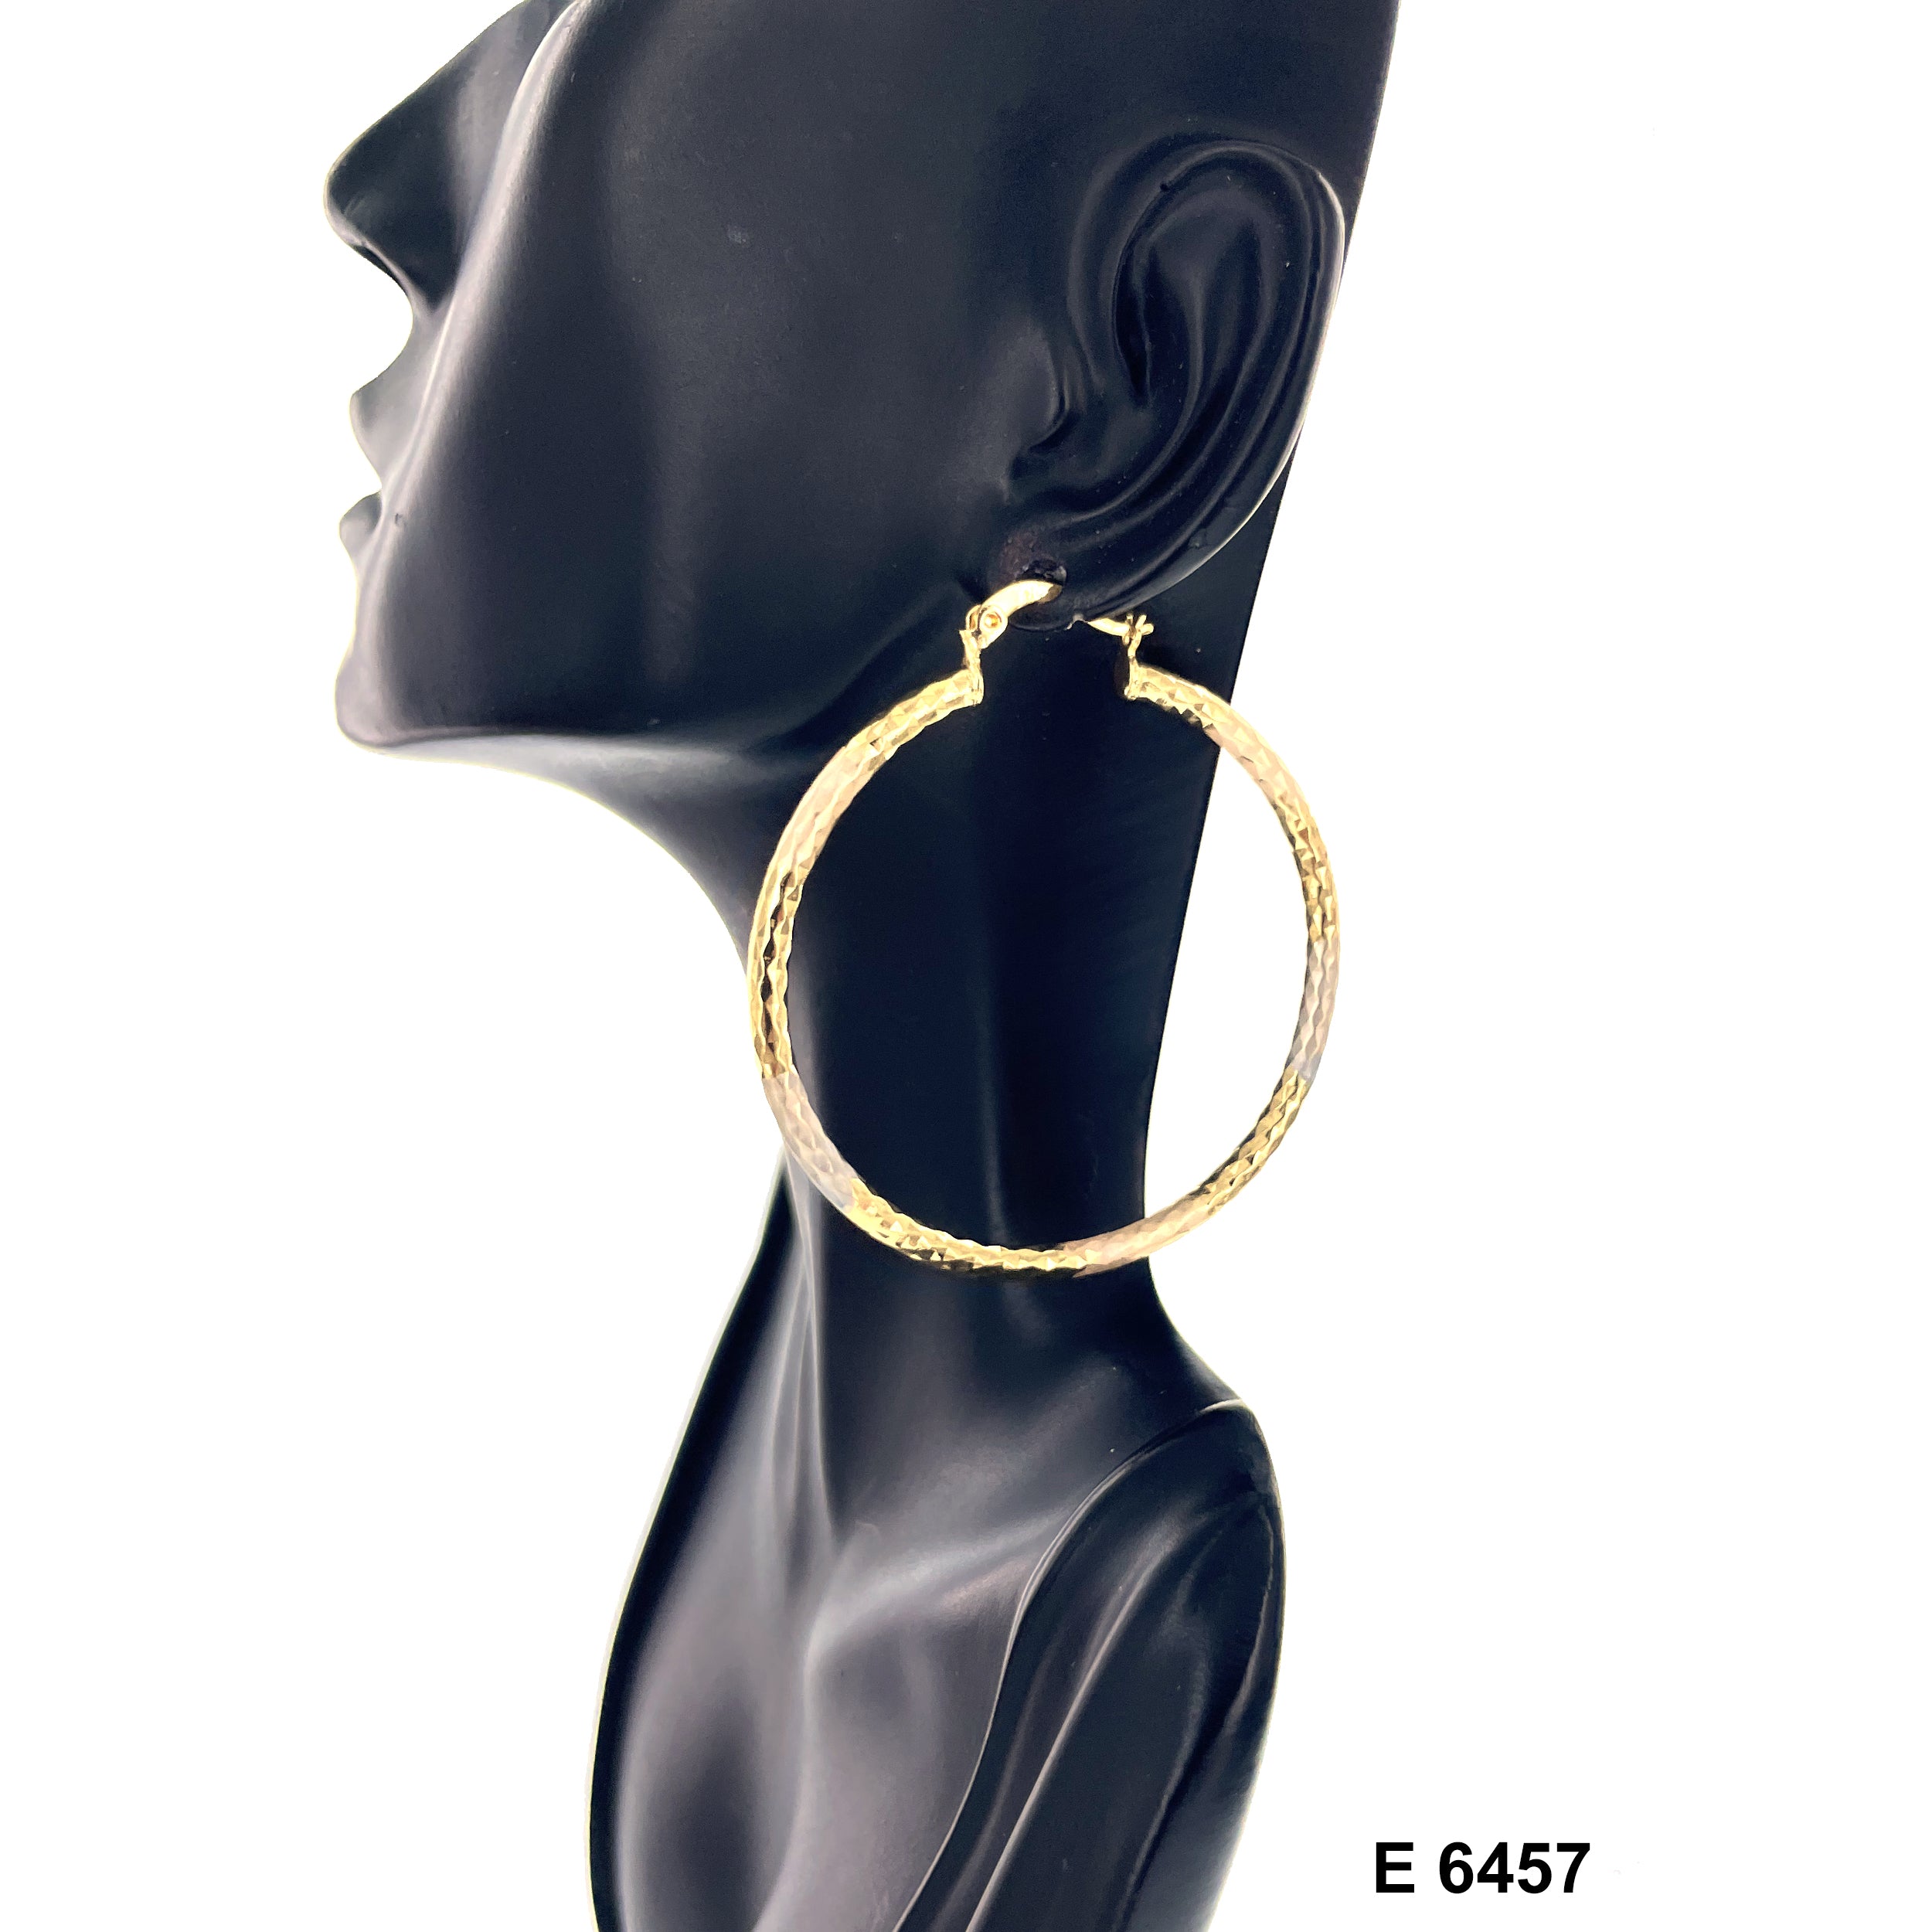 Engraved Hoop Earrings E 6457